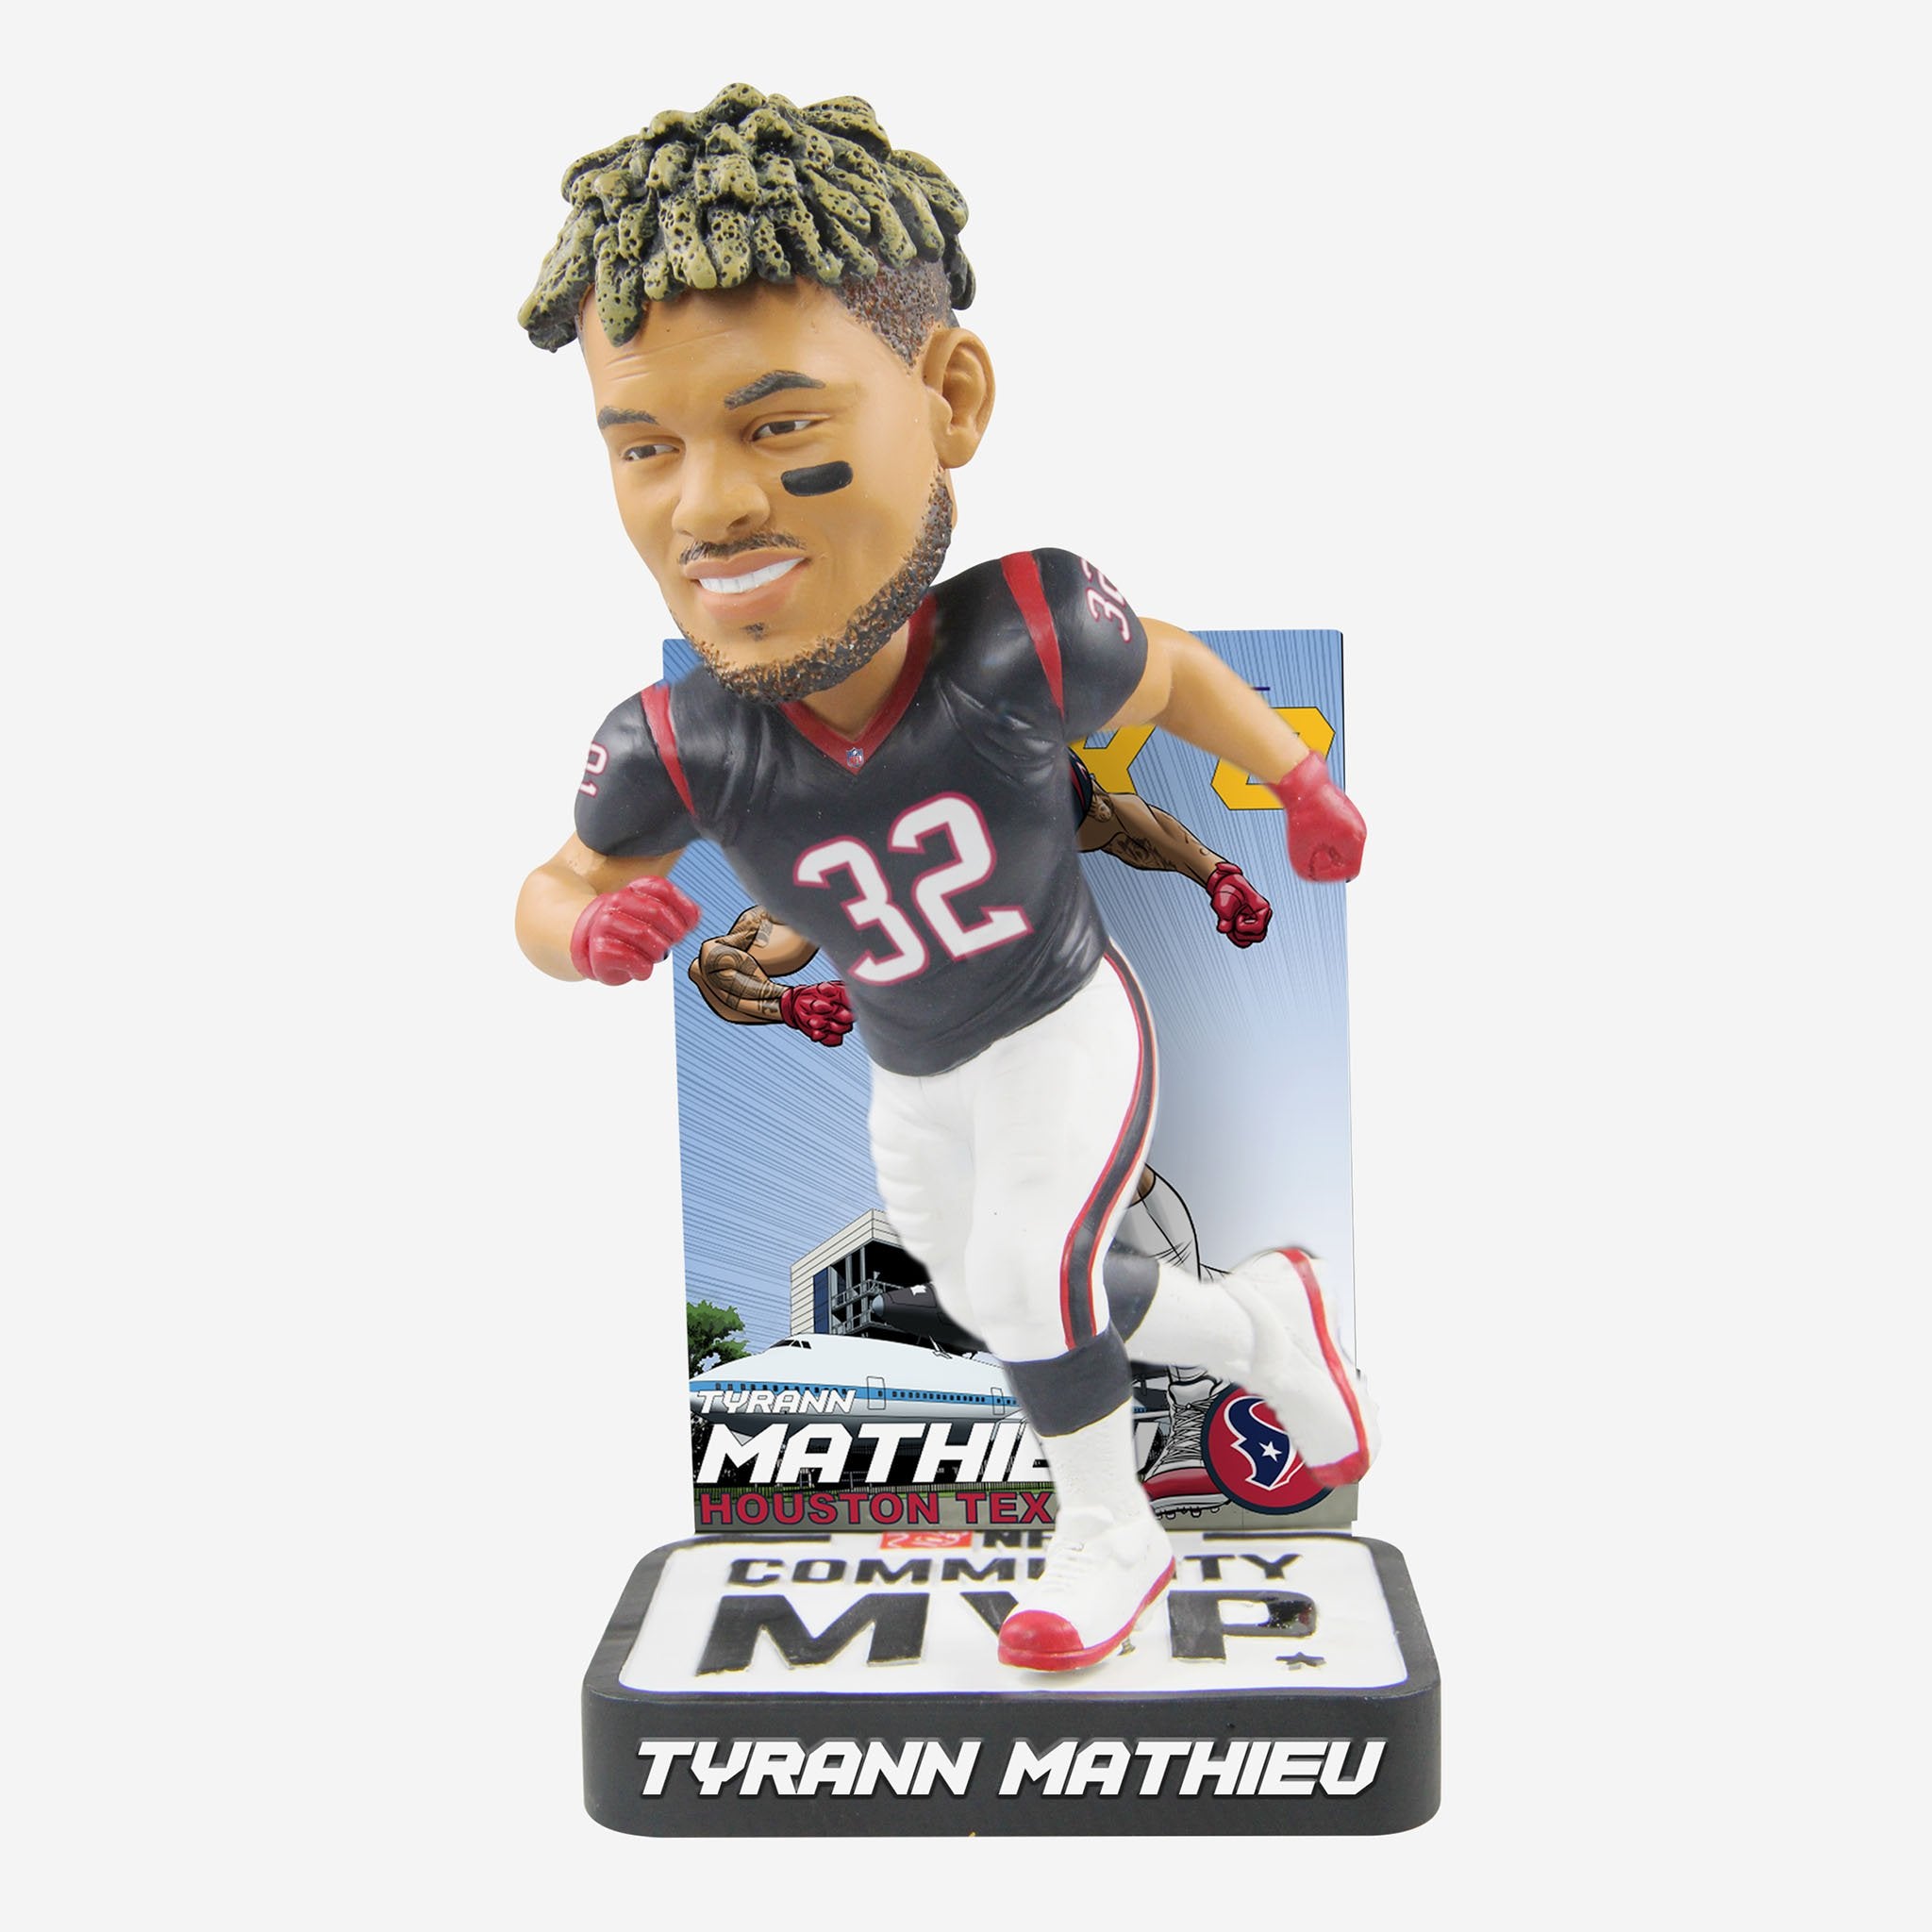 Tyrann Mathieu named NFLPA Community MVP